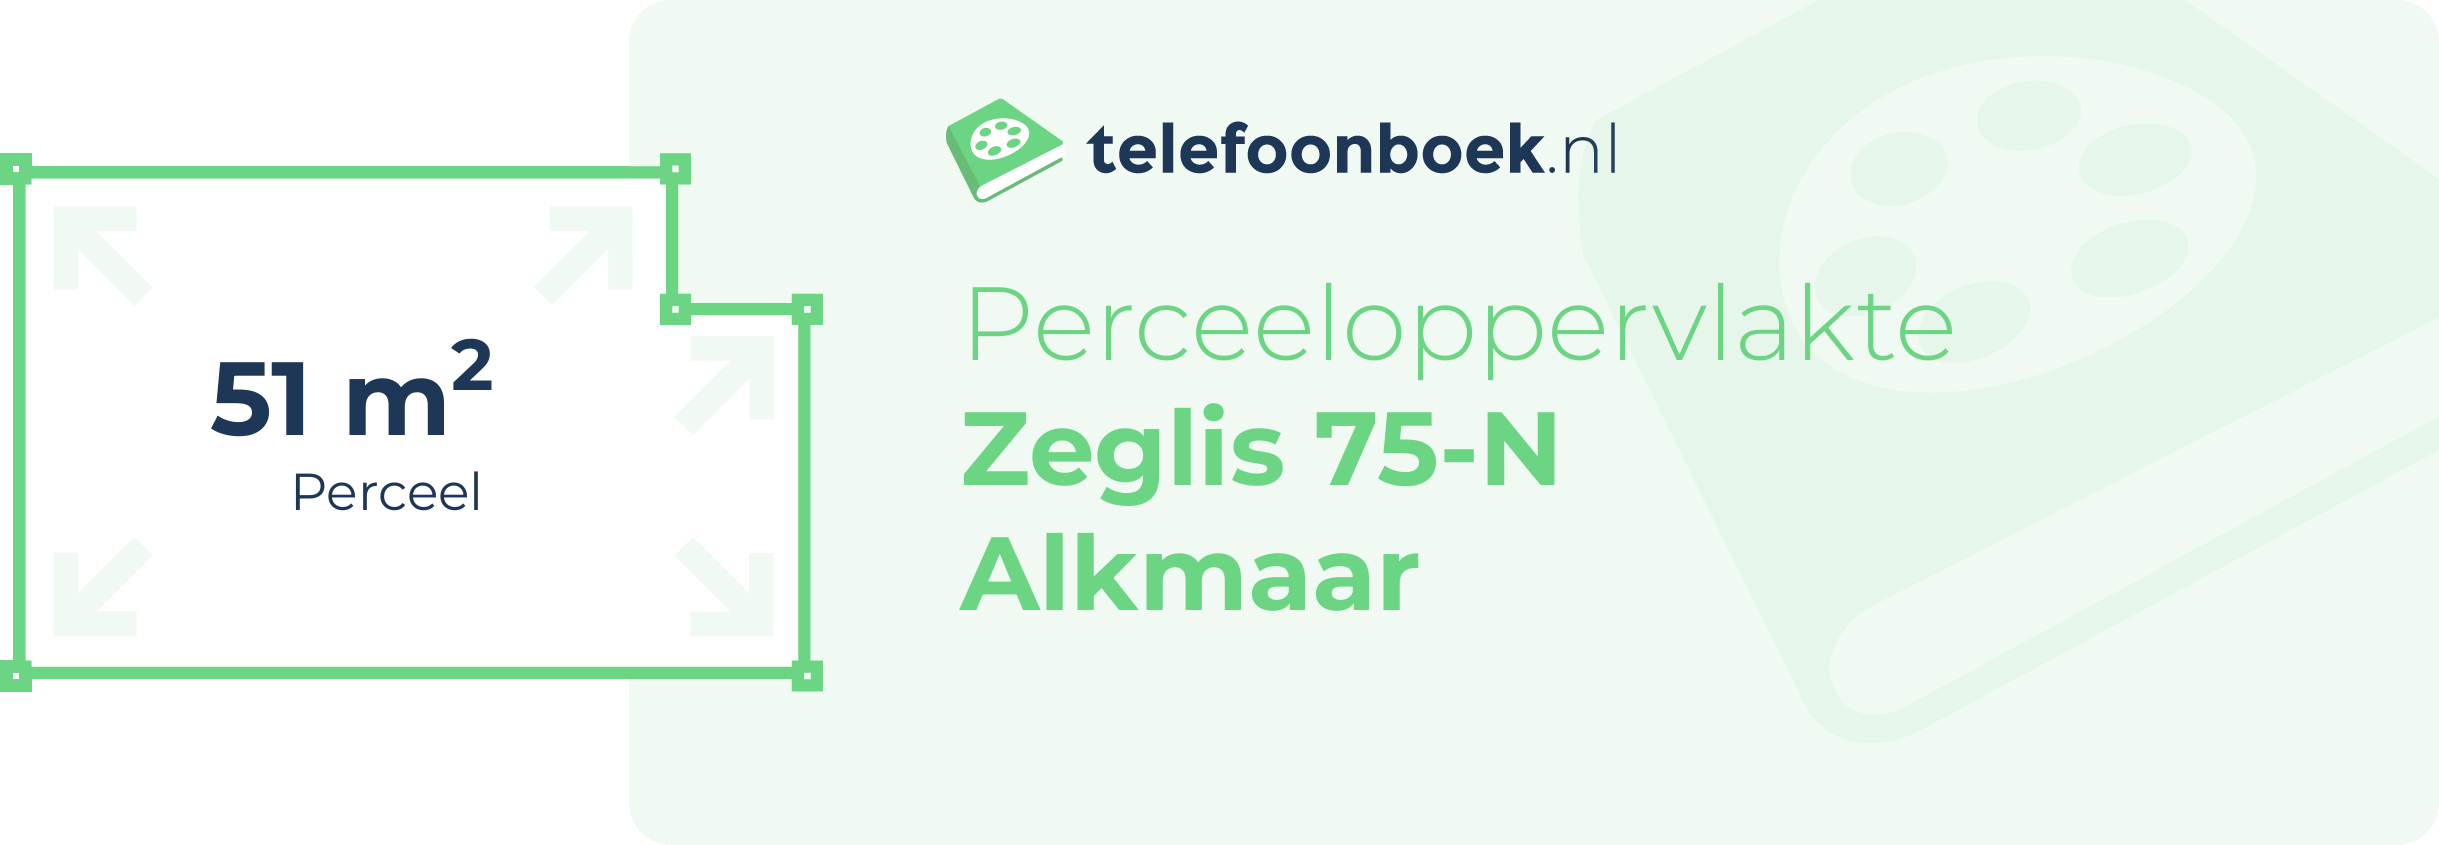 Perceeloppervlakte Zeglis 75-N Alkmaar